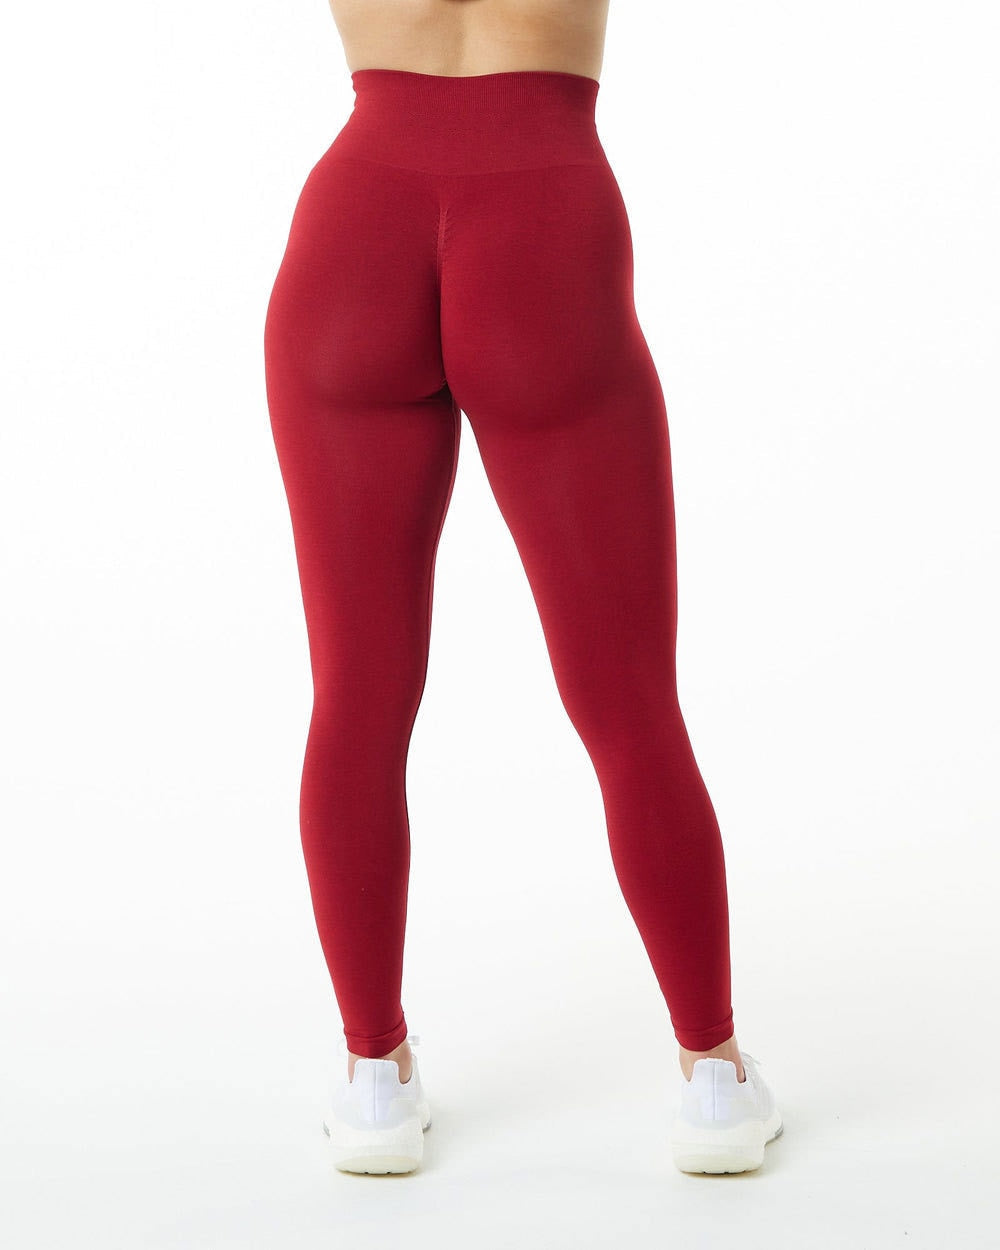 Ruffle Yoga Pants Activewear Truetights Hemp Jam Red S 